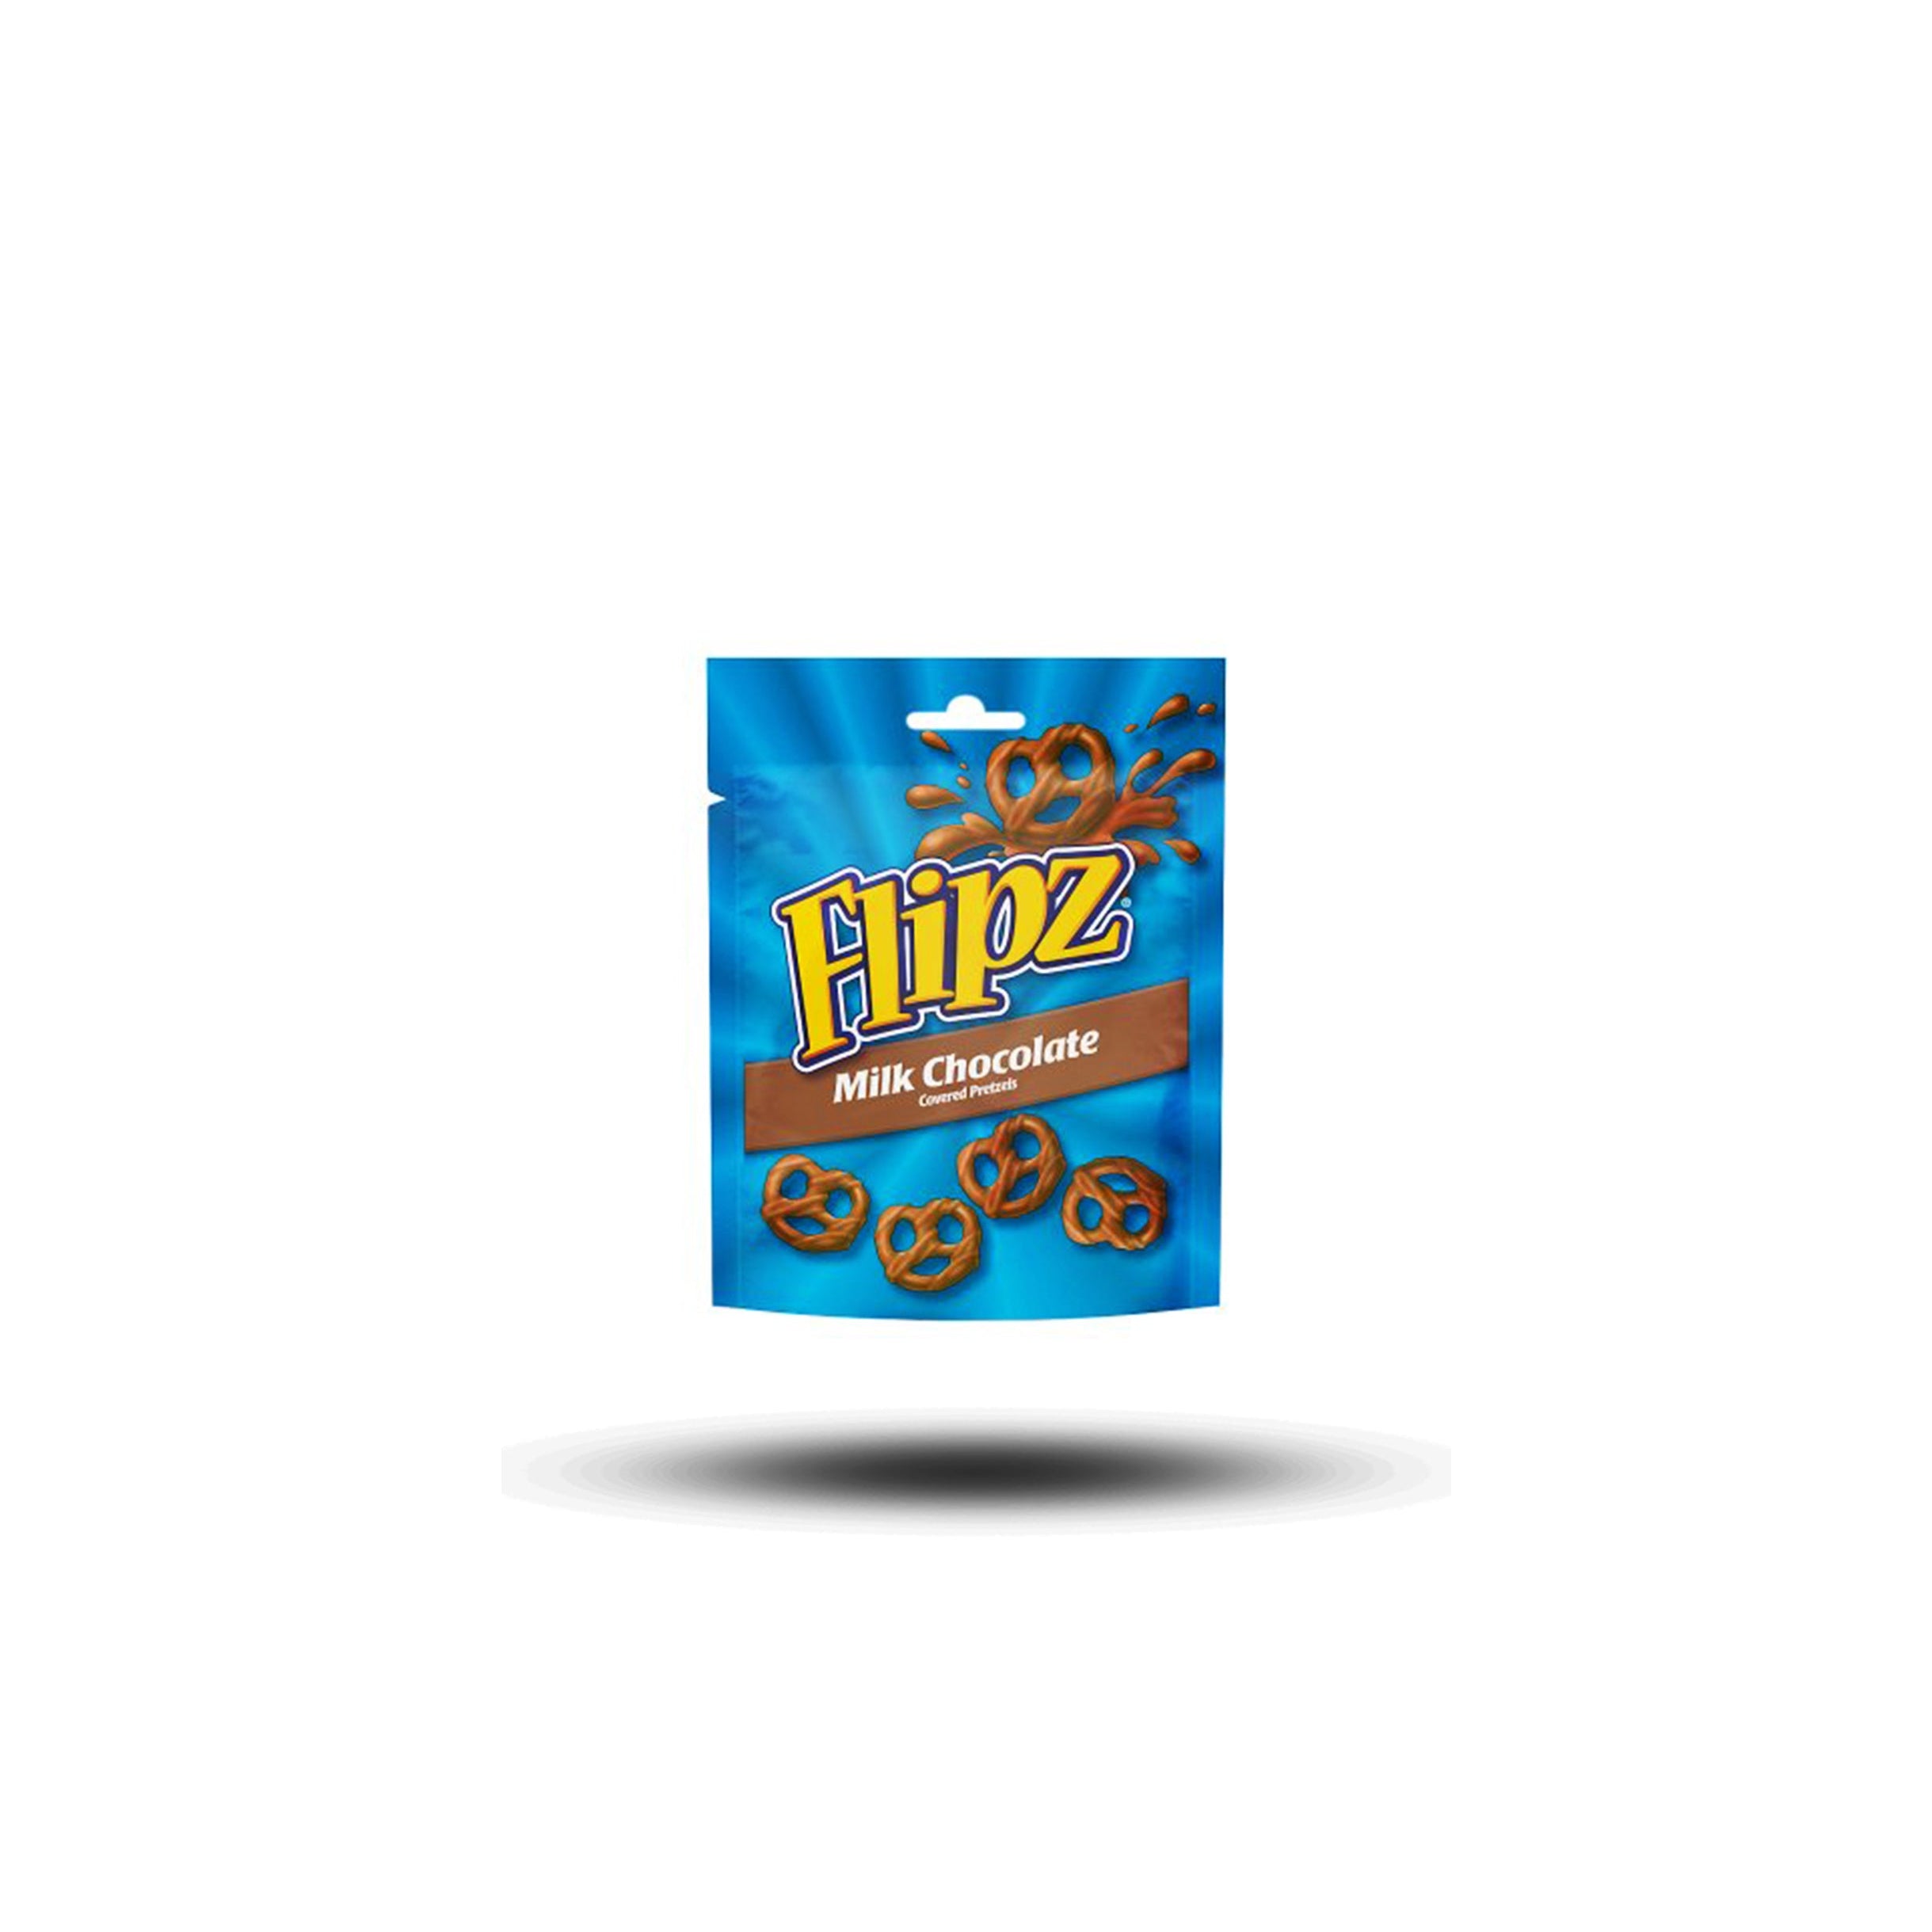 Flipz Milk Chocolate Covered Pretzels 90g-Star Brands North America, Inc.-SNACK SHOP AUSTRIA